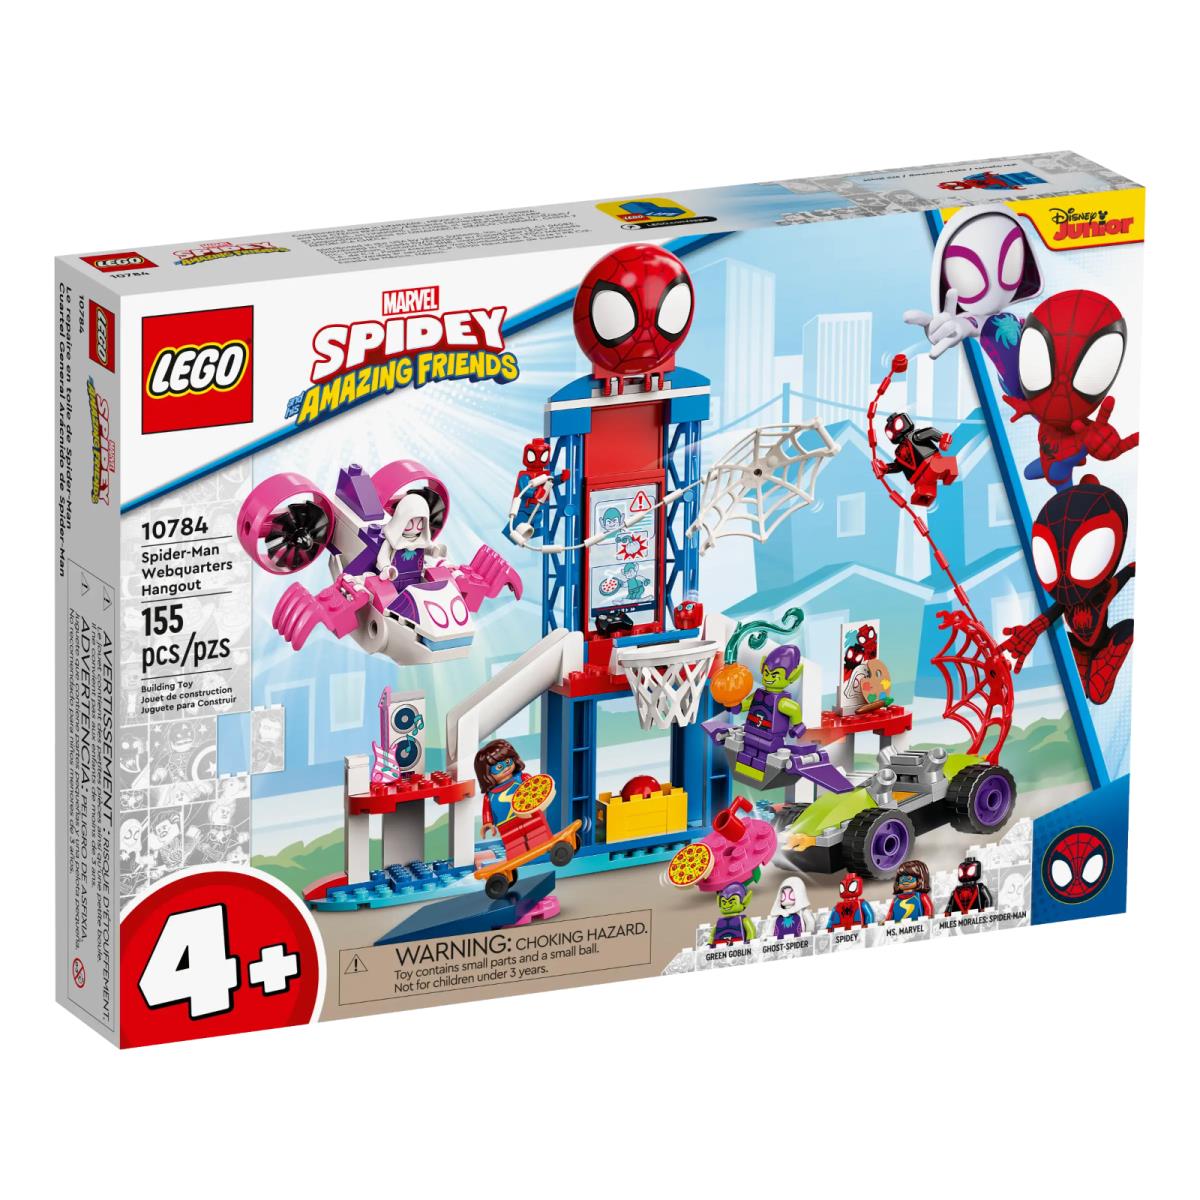 Lego 10784 Marvel Spider-man Webquarters Hangout 4+ Box